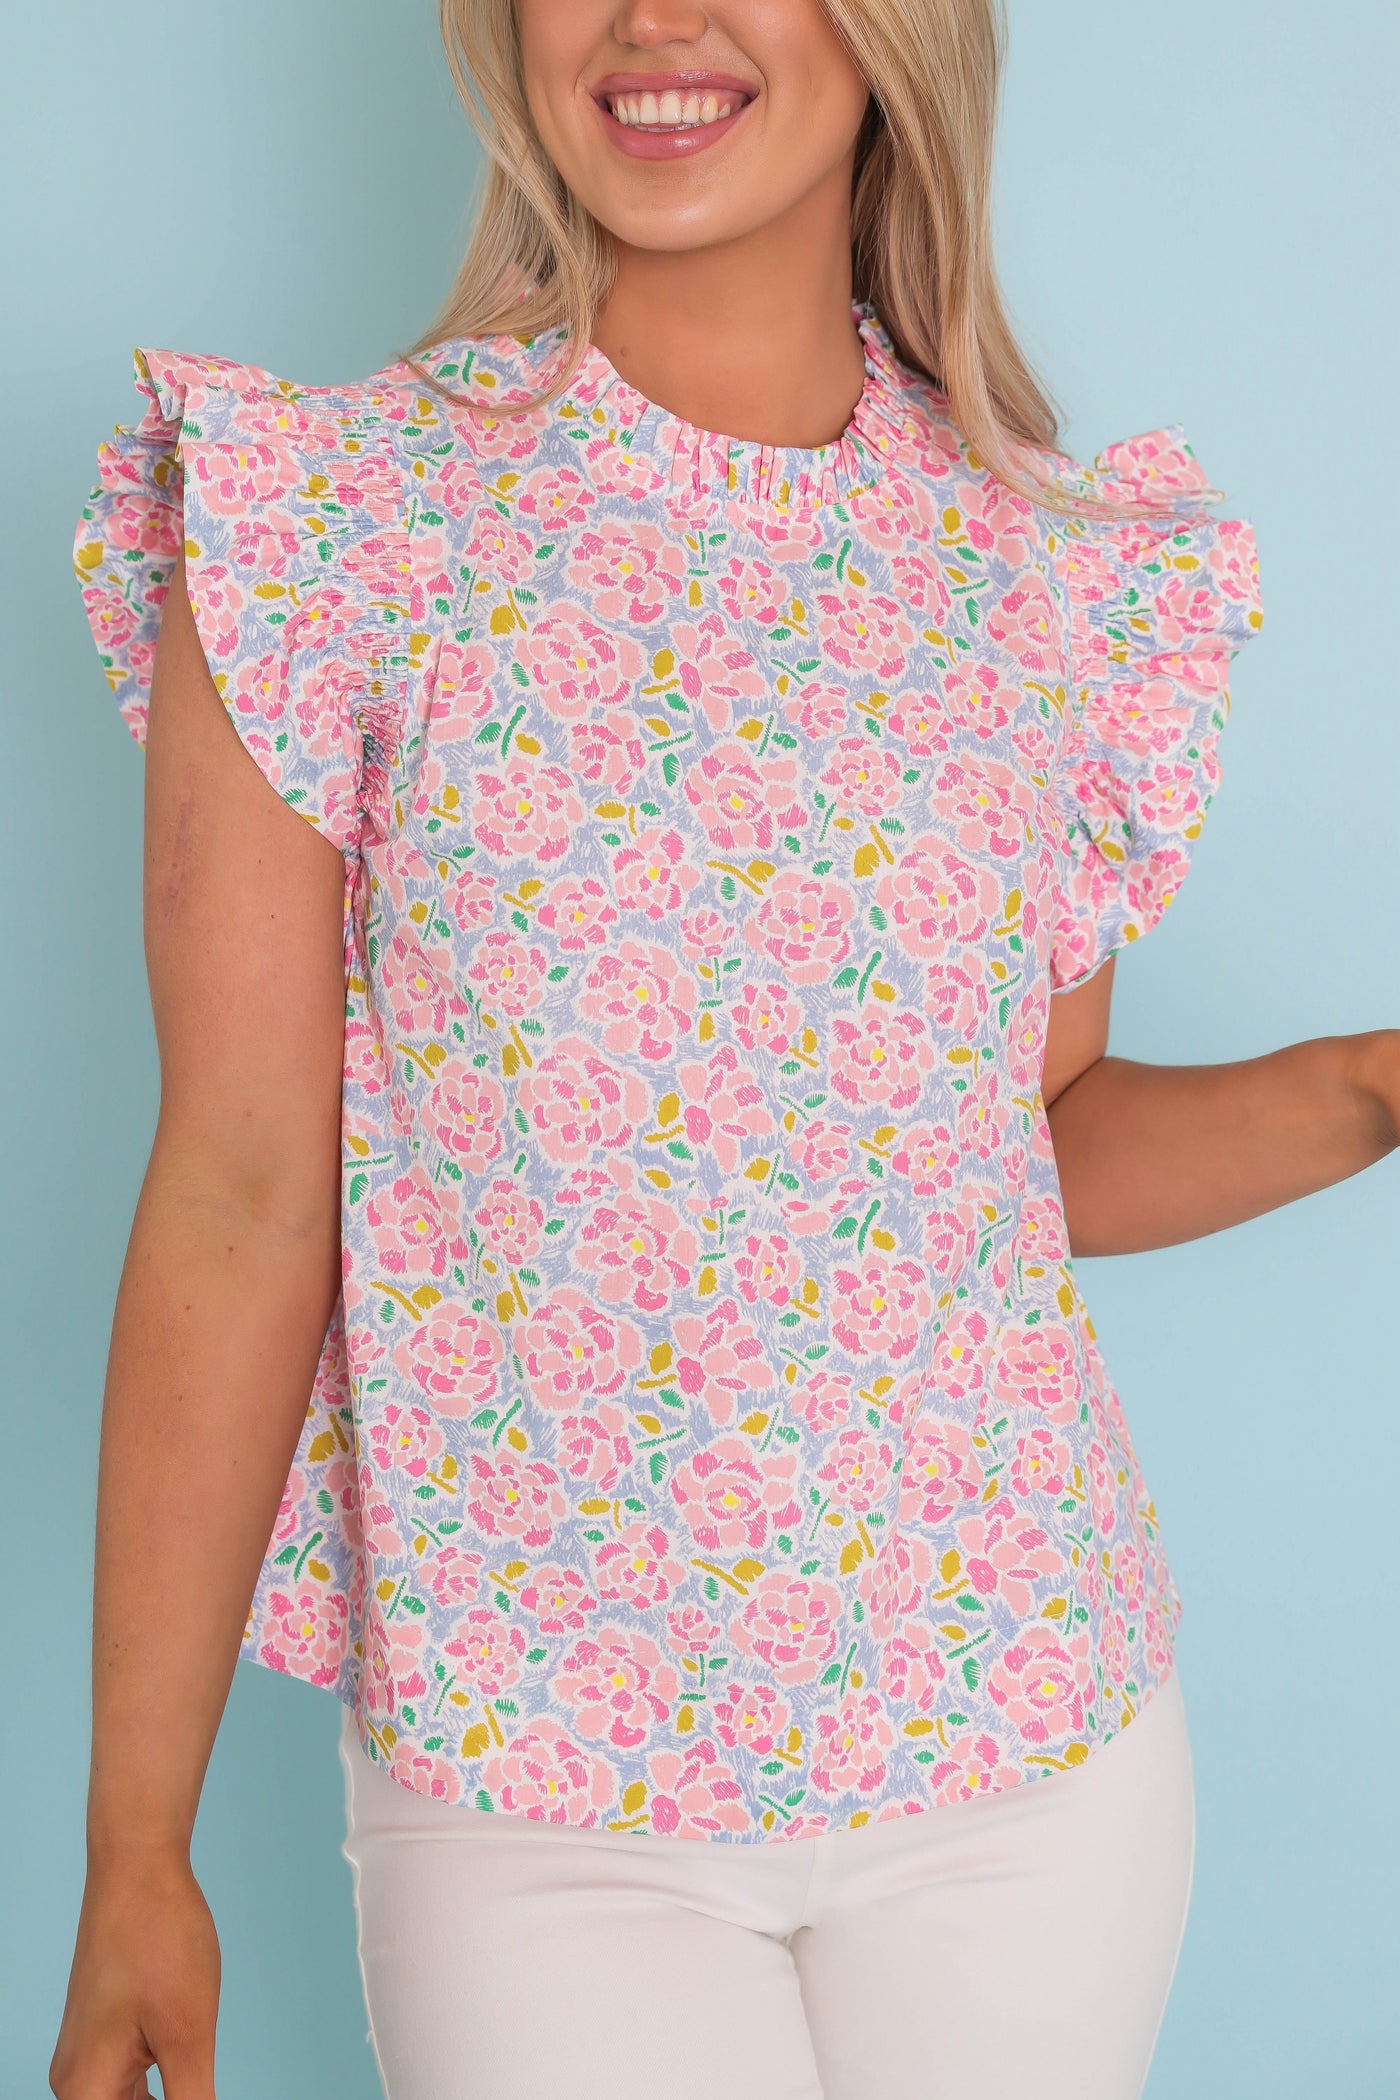 Colorful Flower Print Blouse- Women's Bright Ruffle Blouse- Jodifl Preppy Top